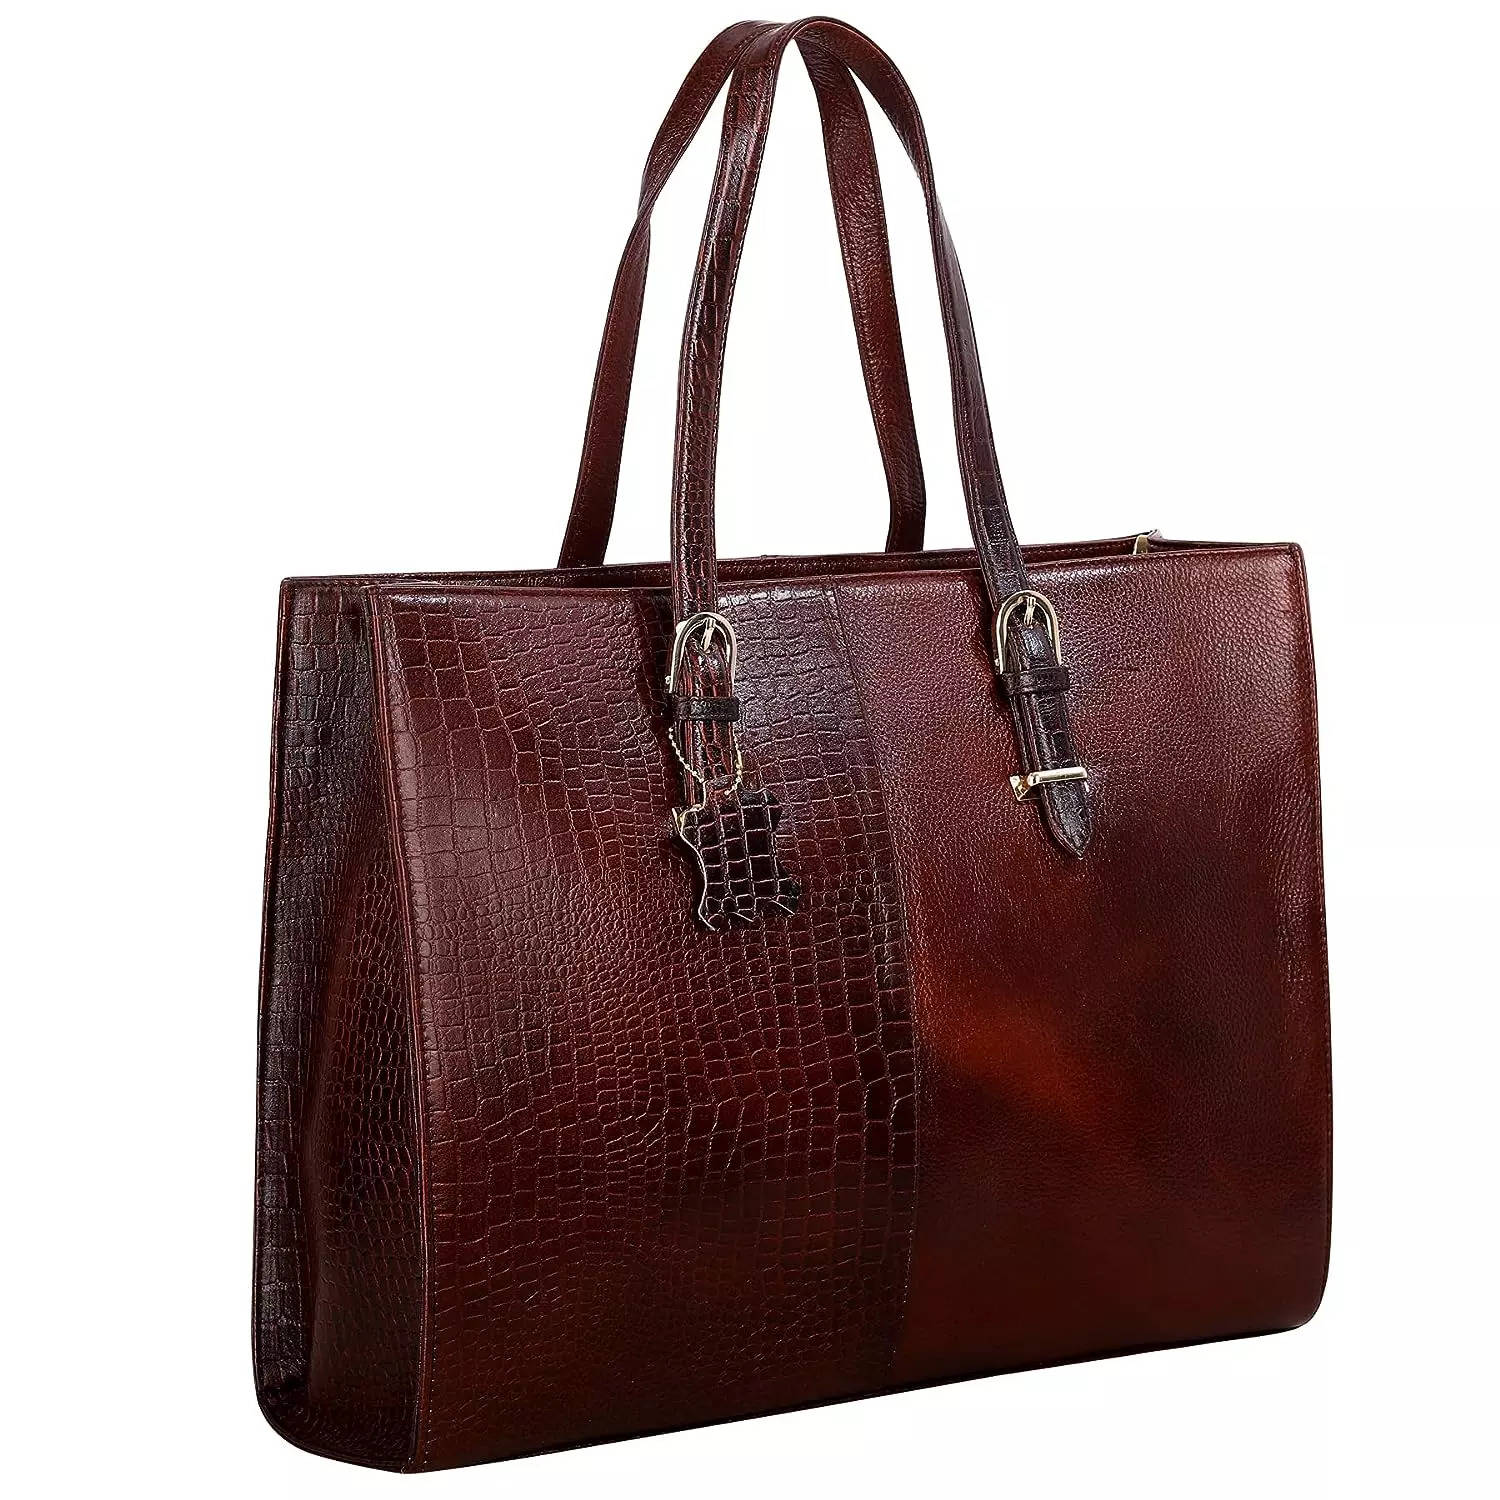 All-day Leather Handbags, Satchels, Slings & Shoulder Bags for Women | eské